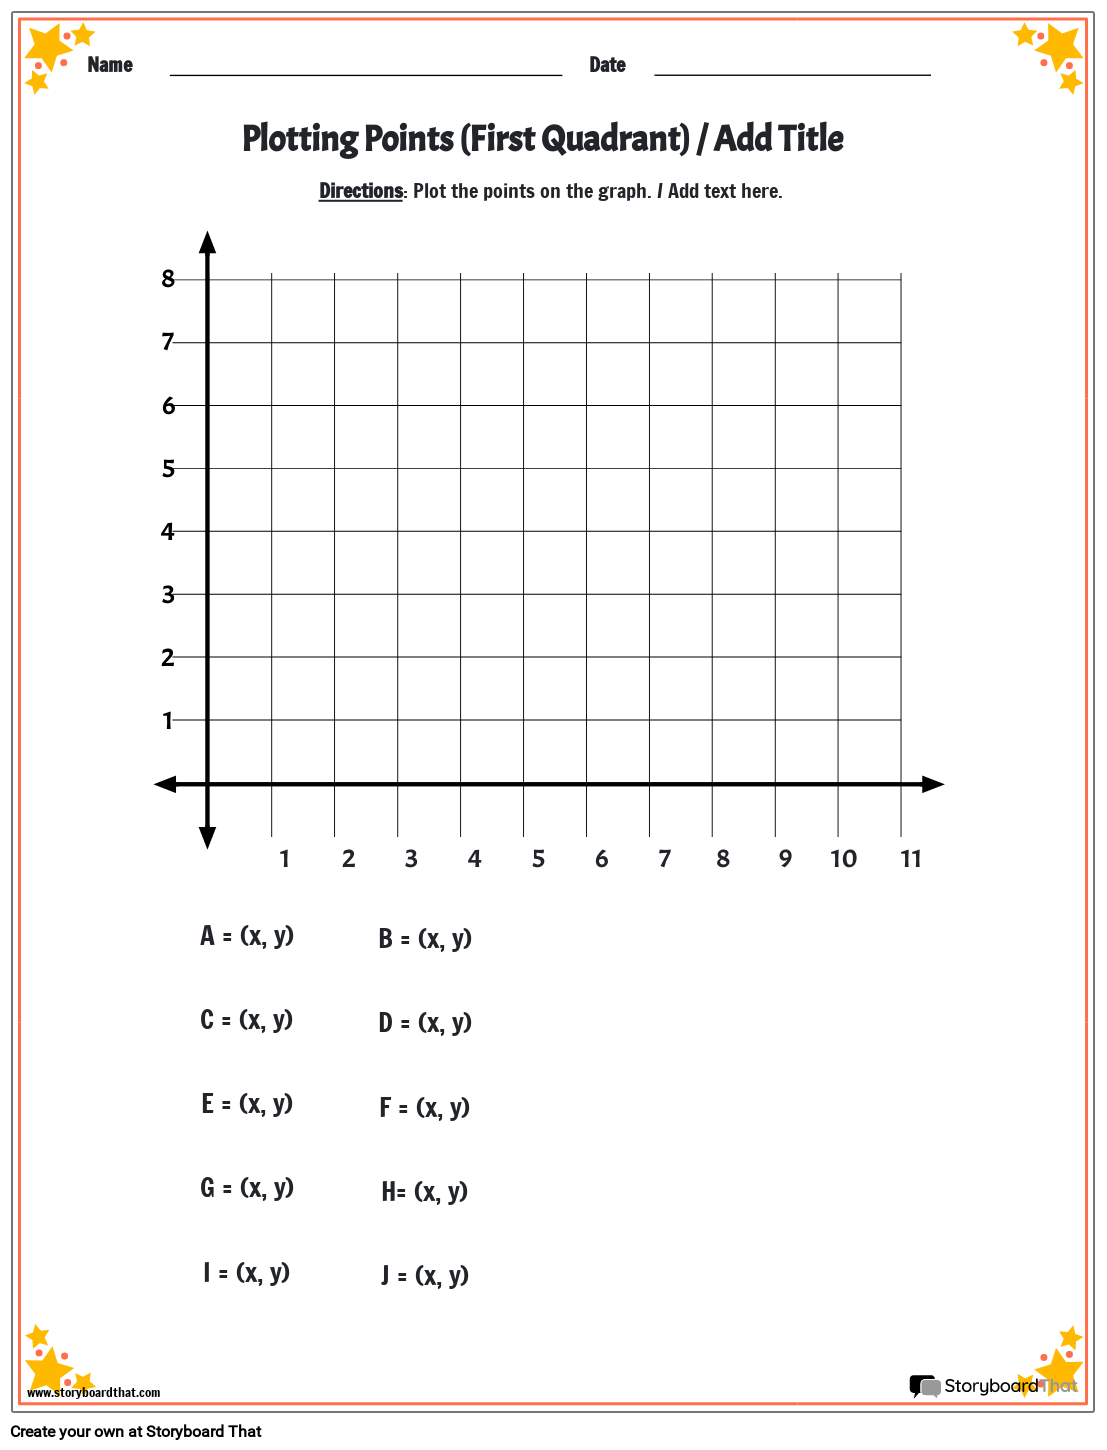 Plotting points on a coordinate plane worksheet